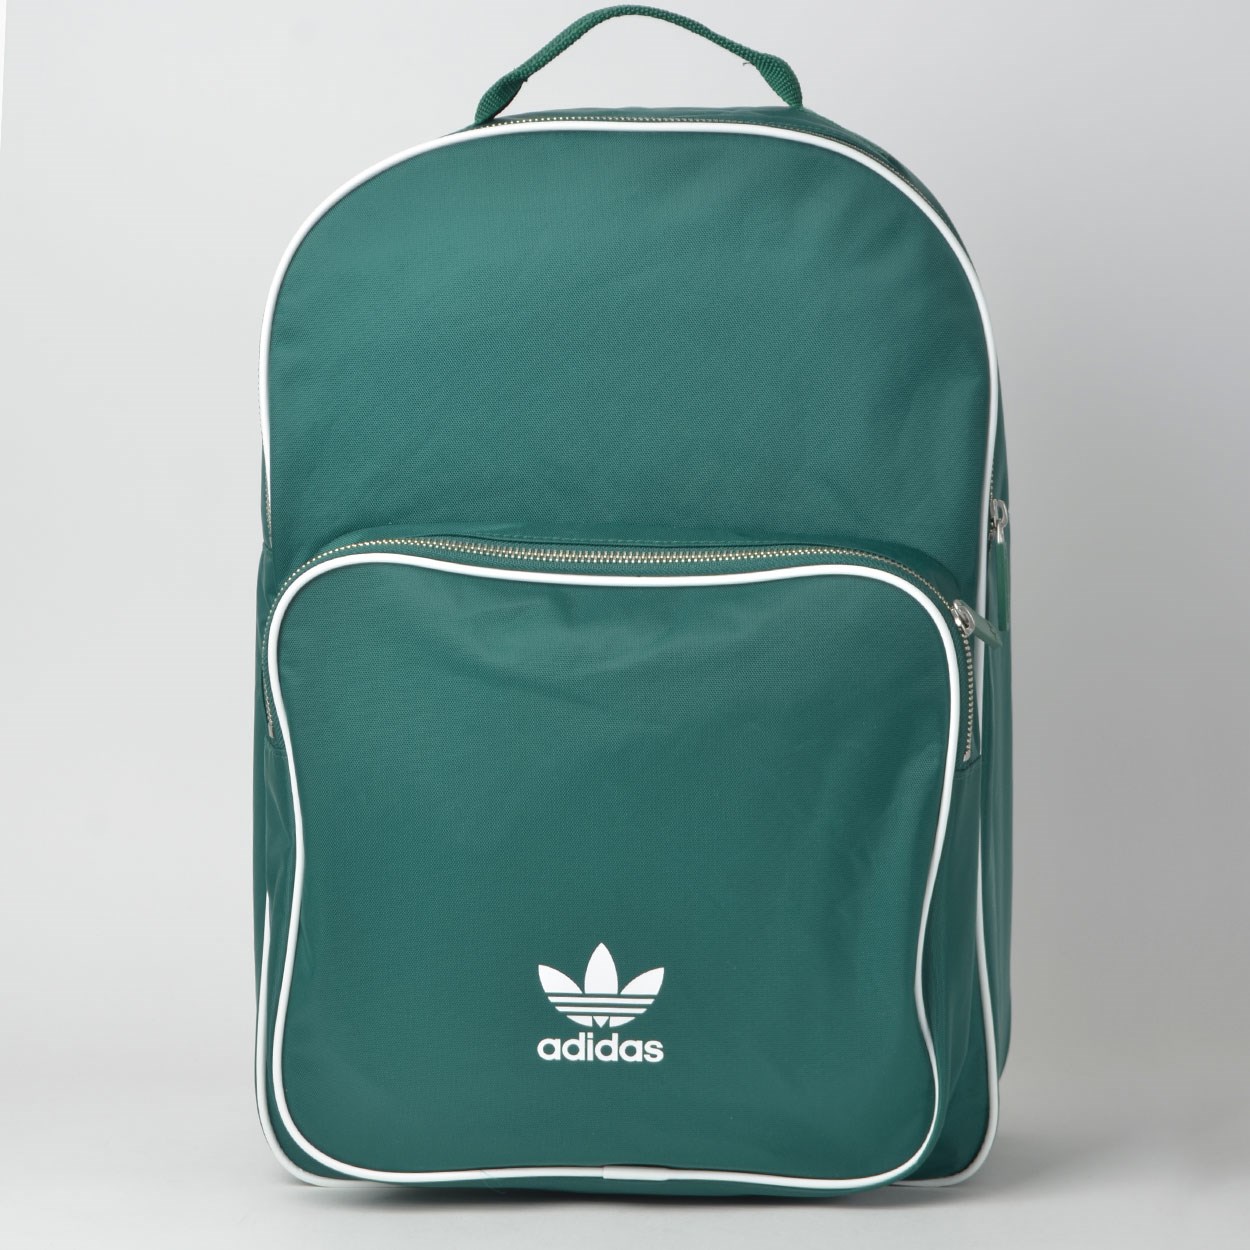 adidas mochilas verdes